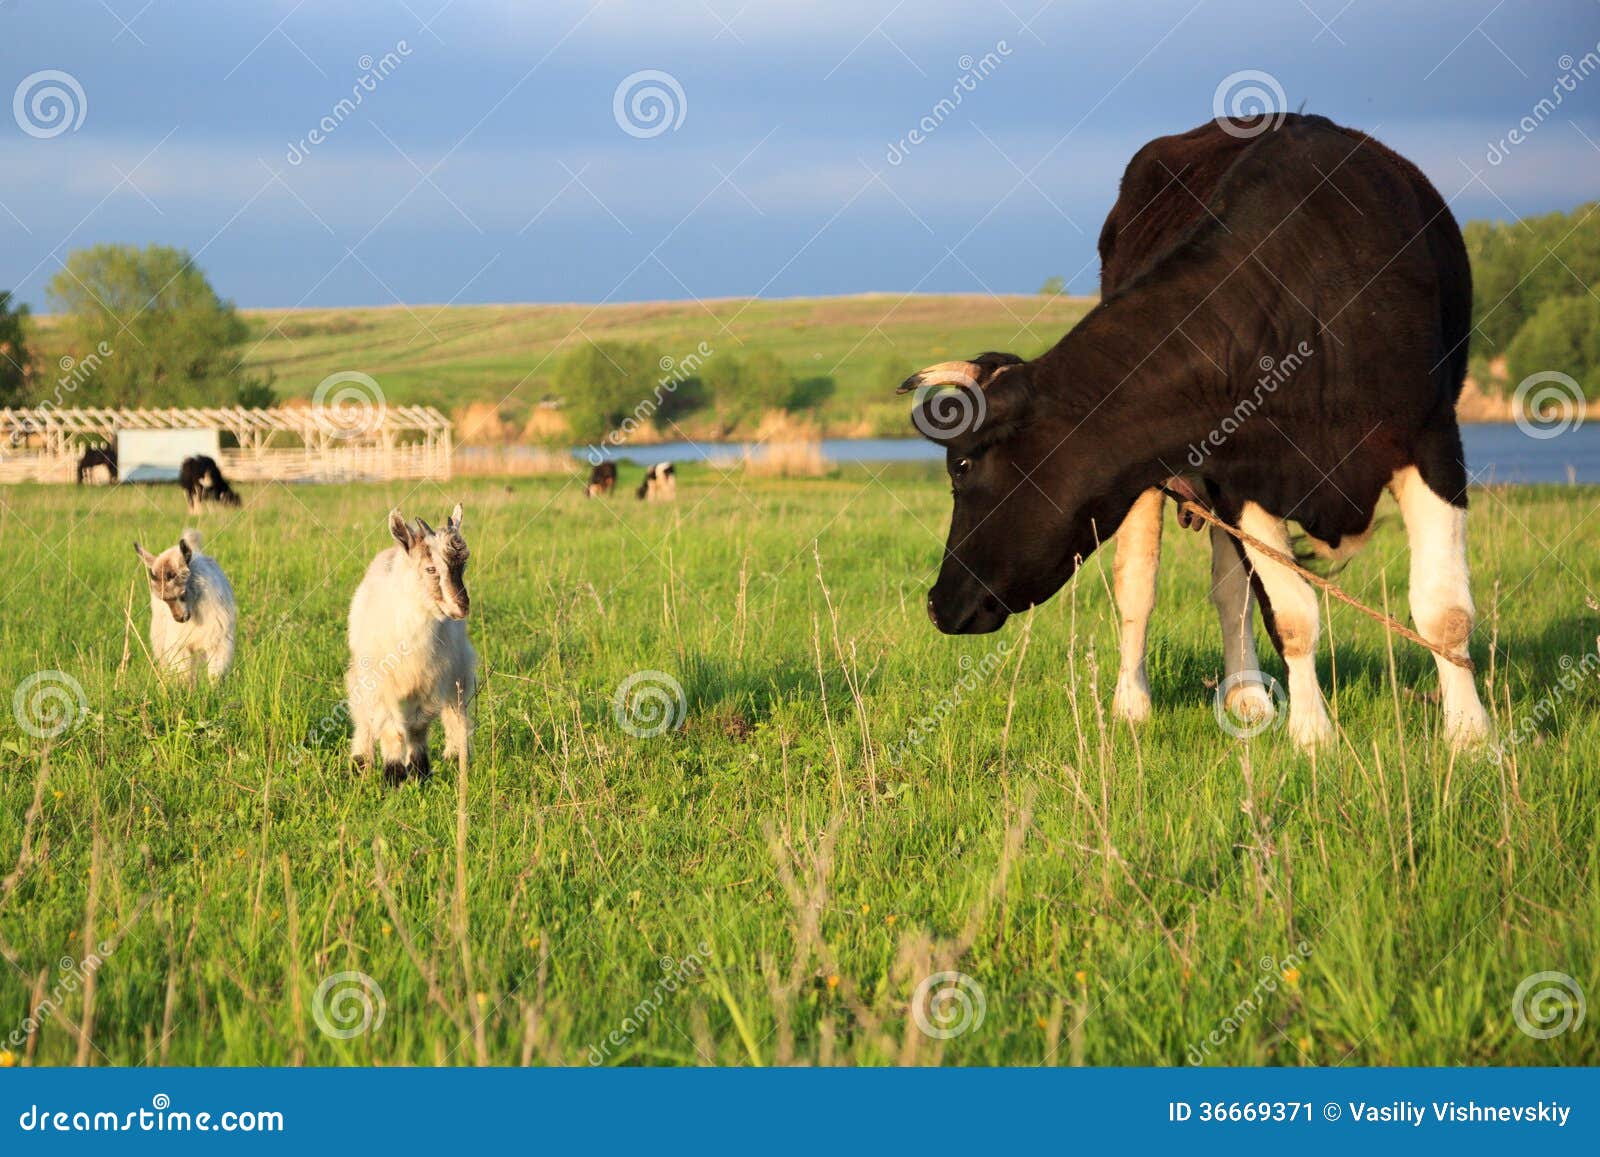 Cow (Bos taurus) stock image. Image of farmland, boss - 36669371